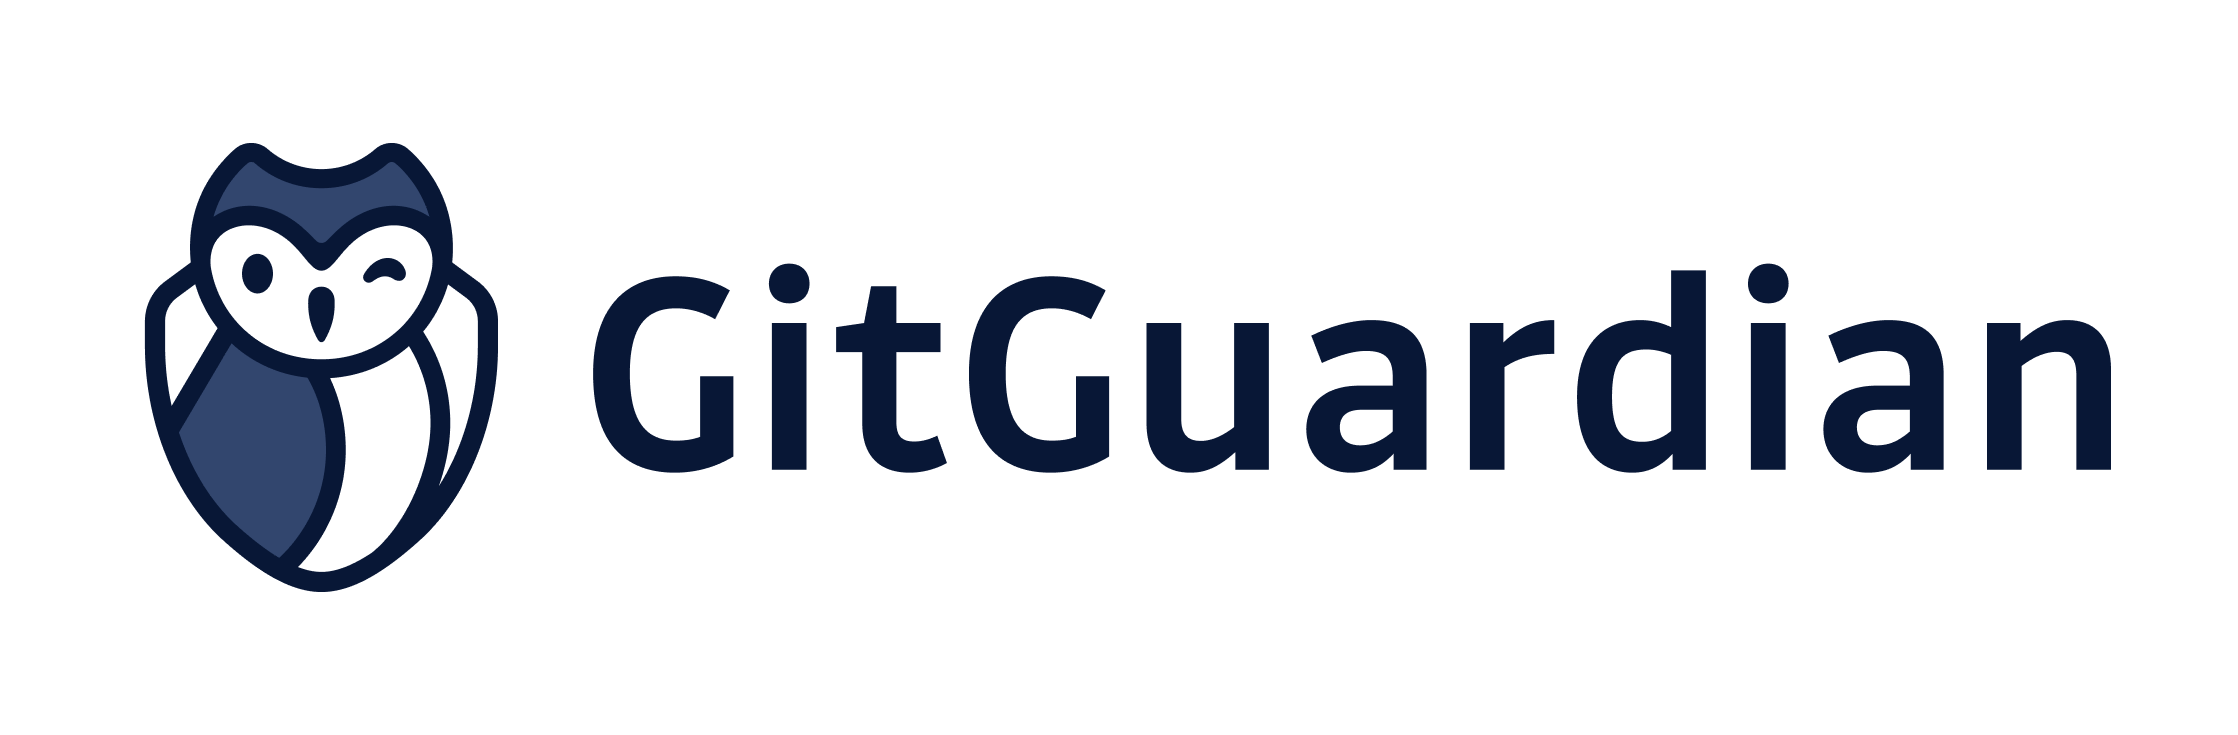 GitGuardian Logo